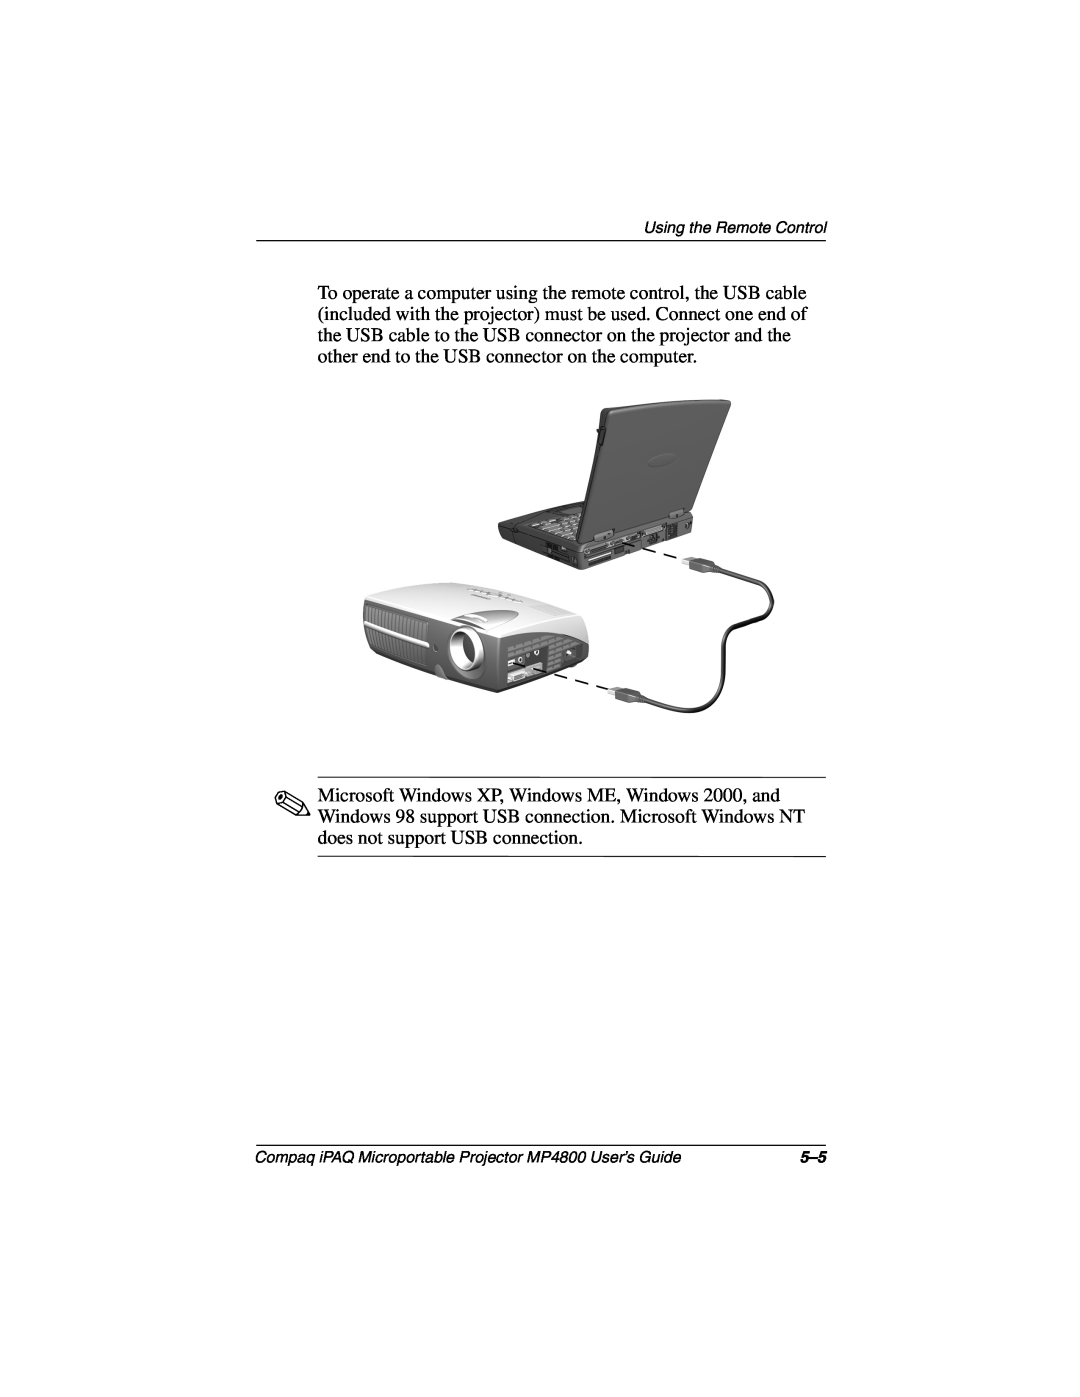 Compaq MP4800 manual 